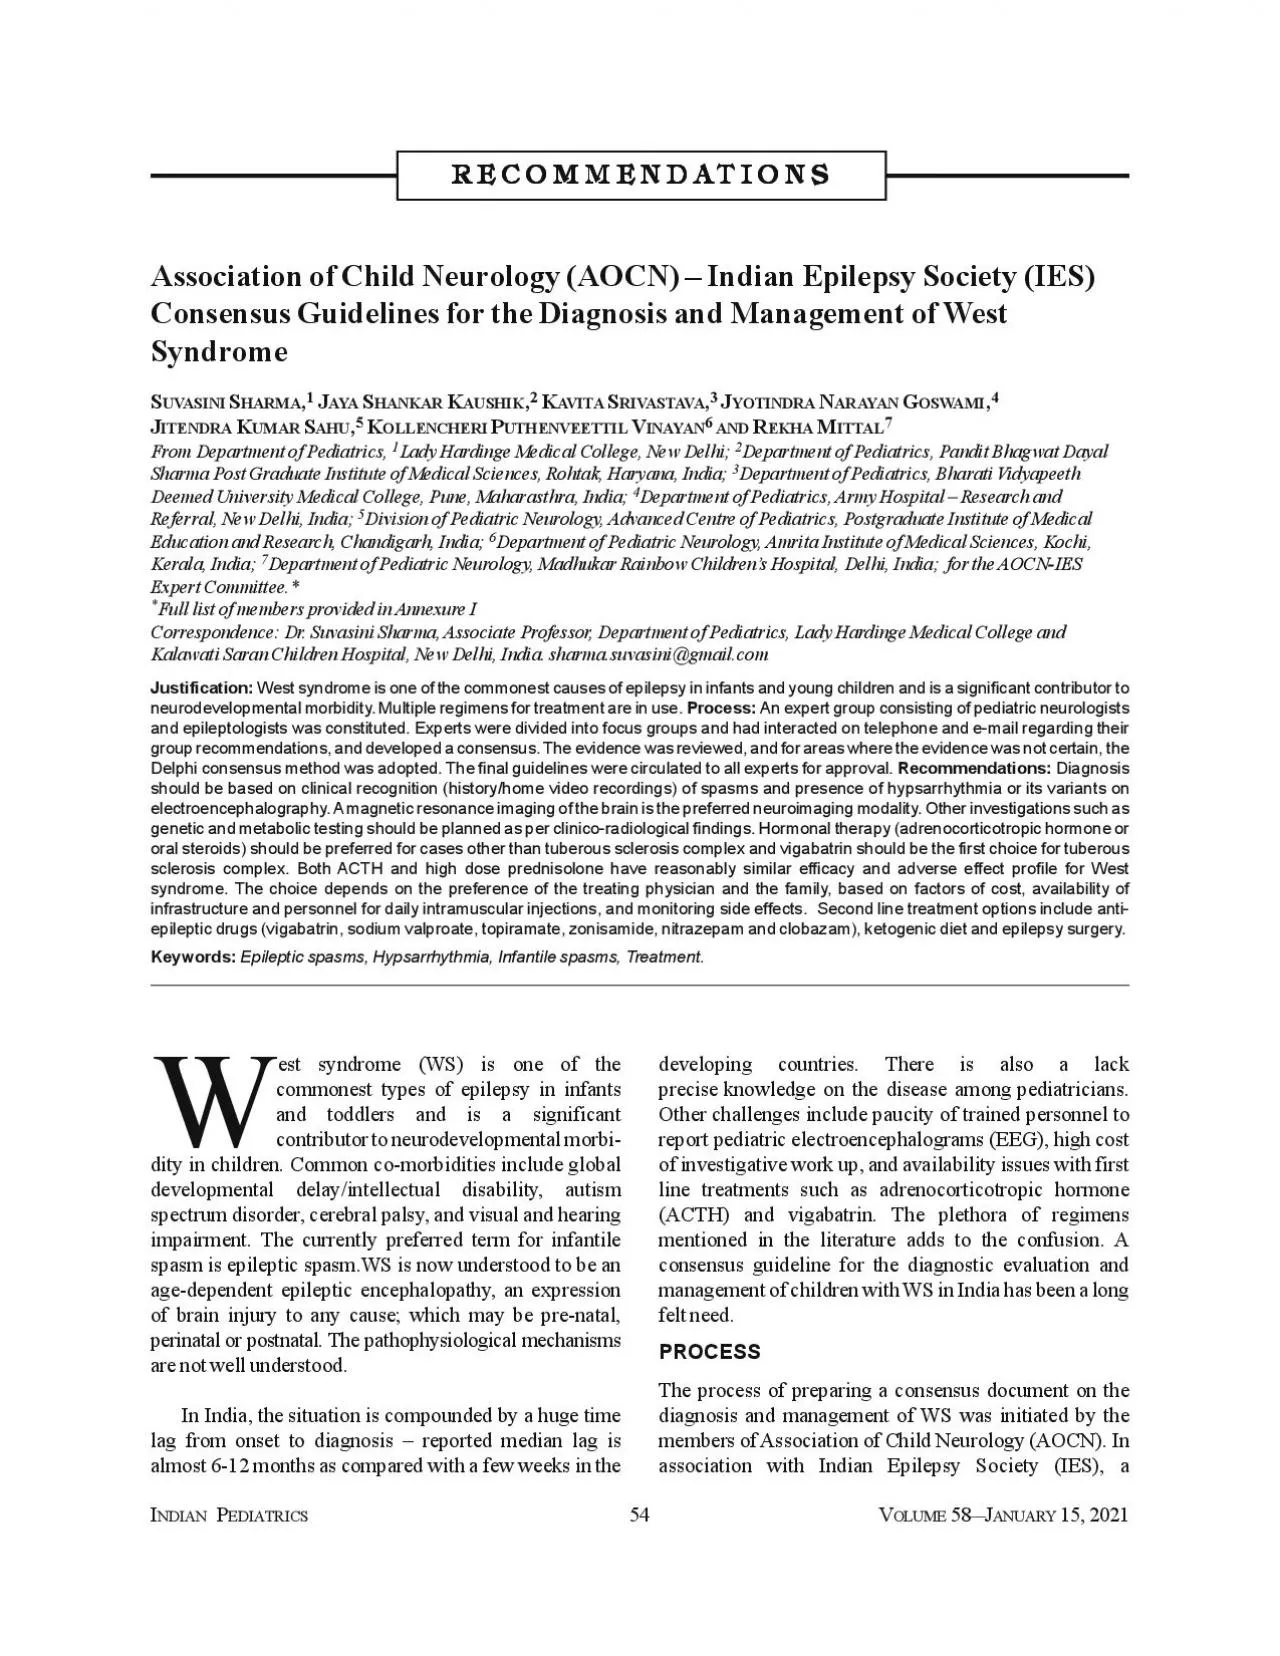 P54V 58 15 2021Association of Child Neurology AOCN  Indian Epileps